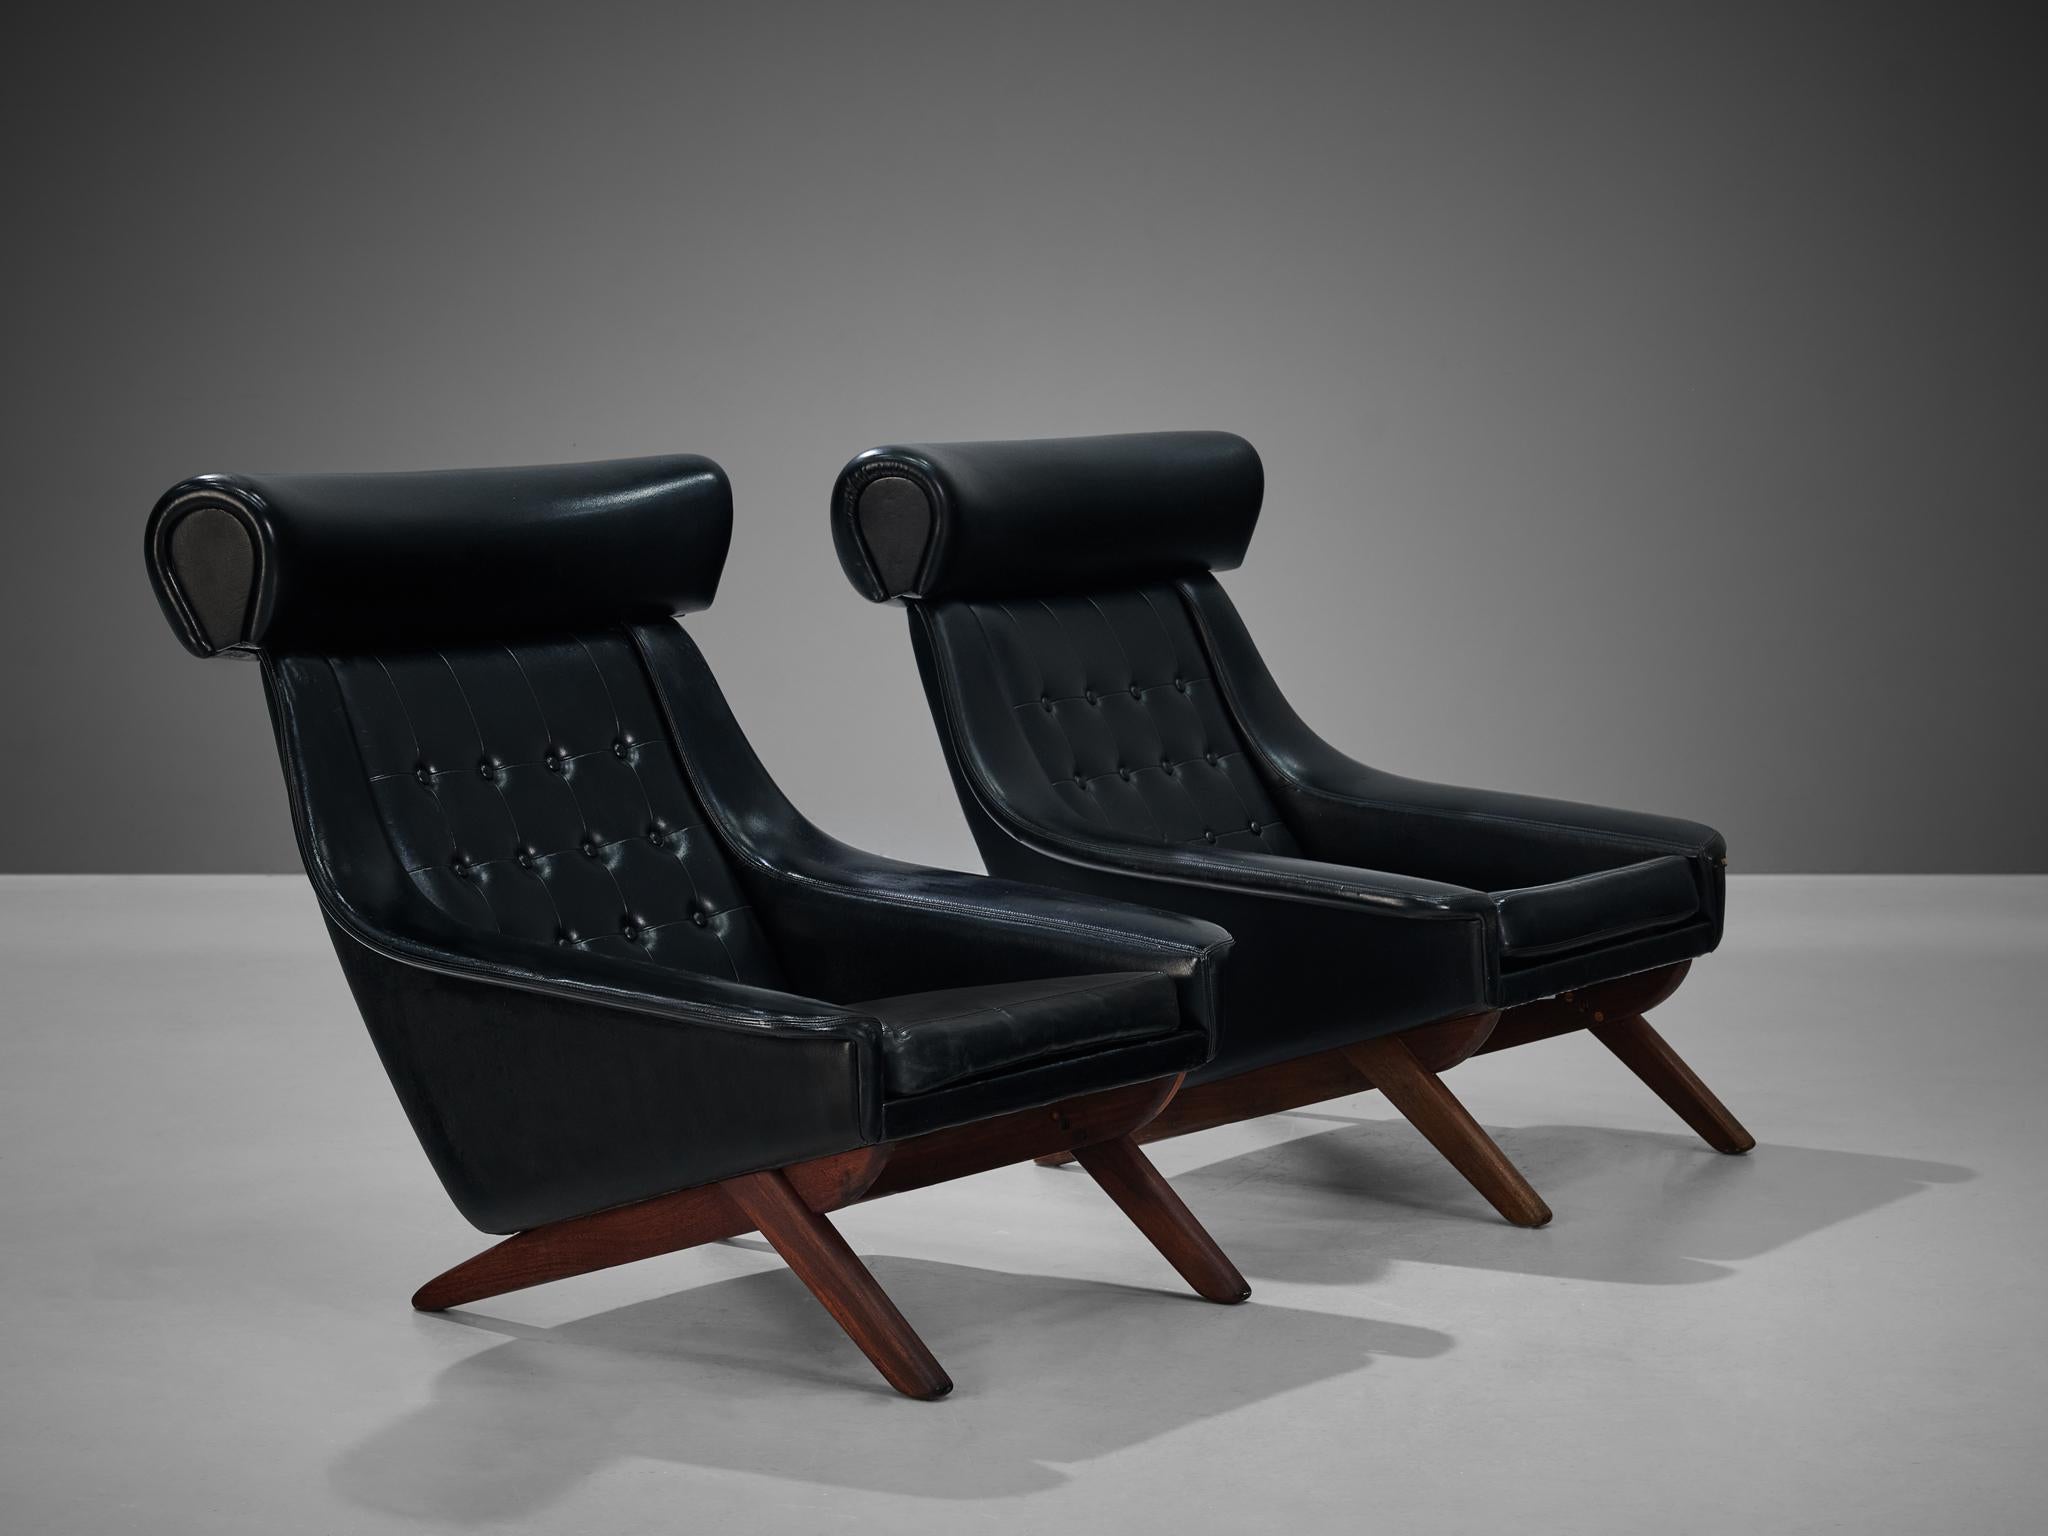 Illum Wikkelsø, Paar Loungesessel, Kunstleder, Teakholz, Dänemark 1960er Jahre.

Gut gestaltete Sessel mit schwarzem Kunstlederbezug des dänischen Designers Illum Wikkelsø. Dieser 